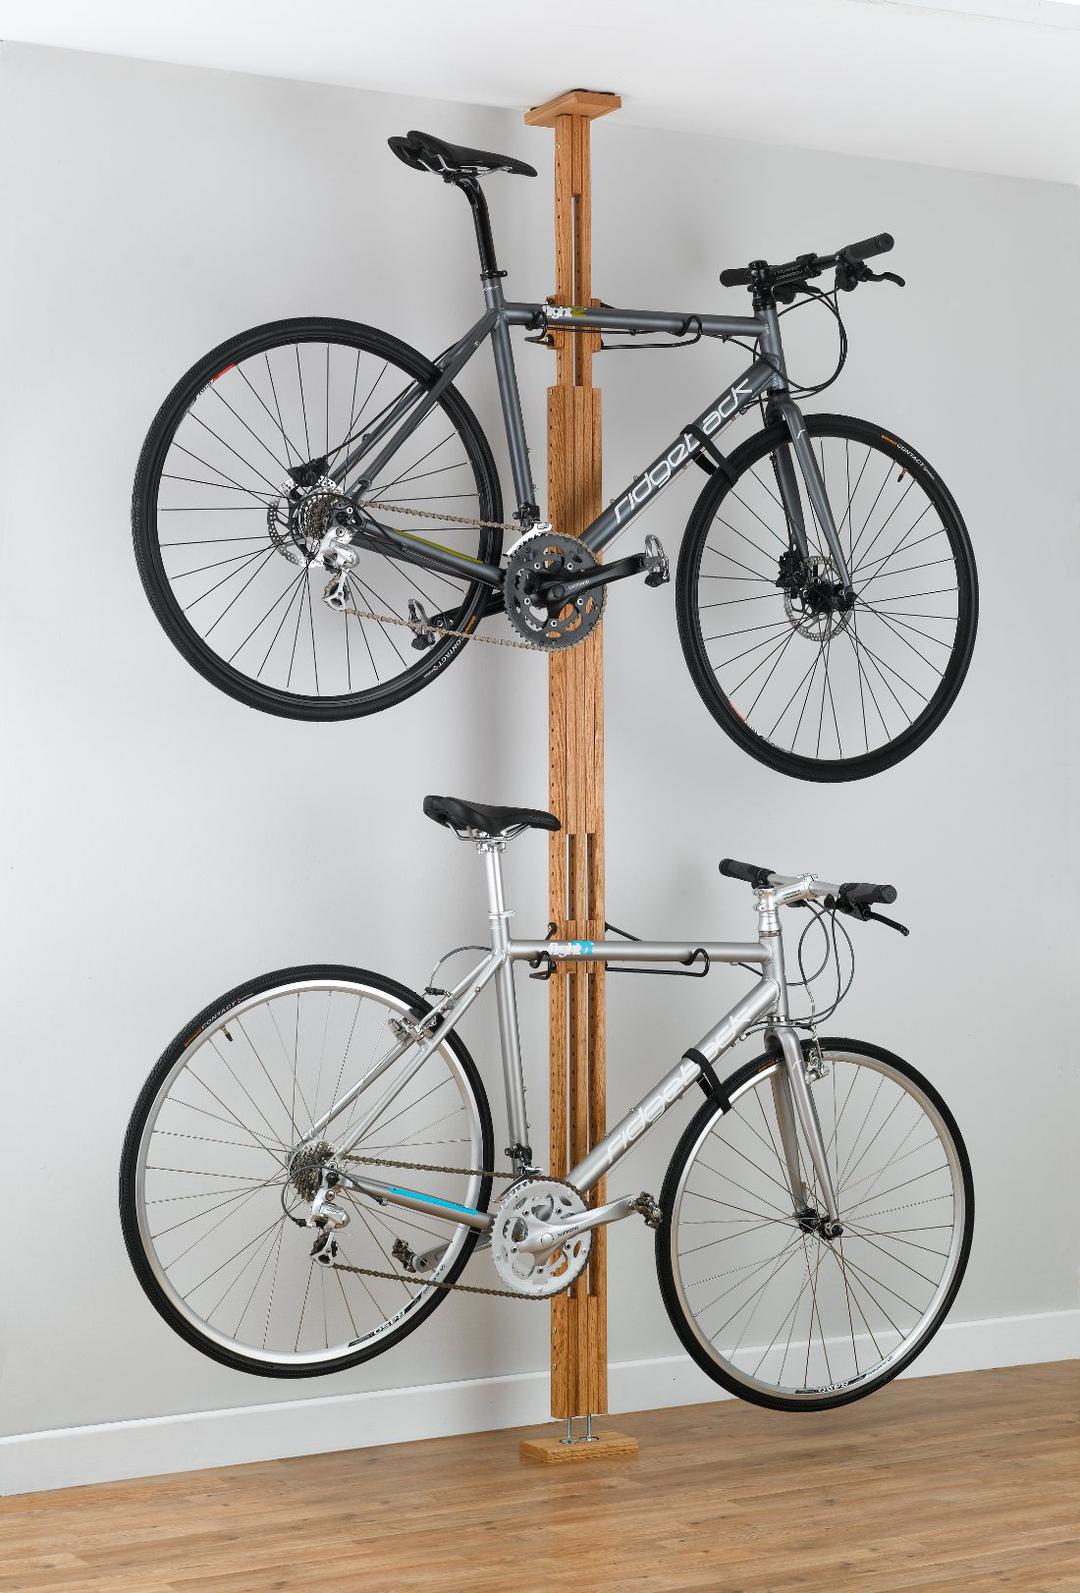 Bike storage racks, bike lifts, family bicycle racks 